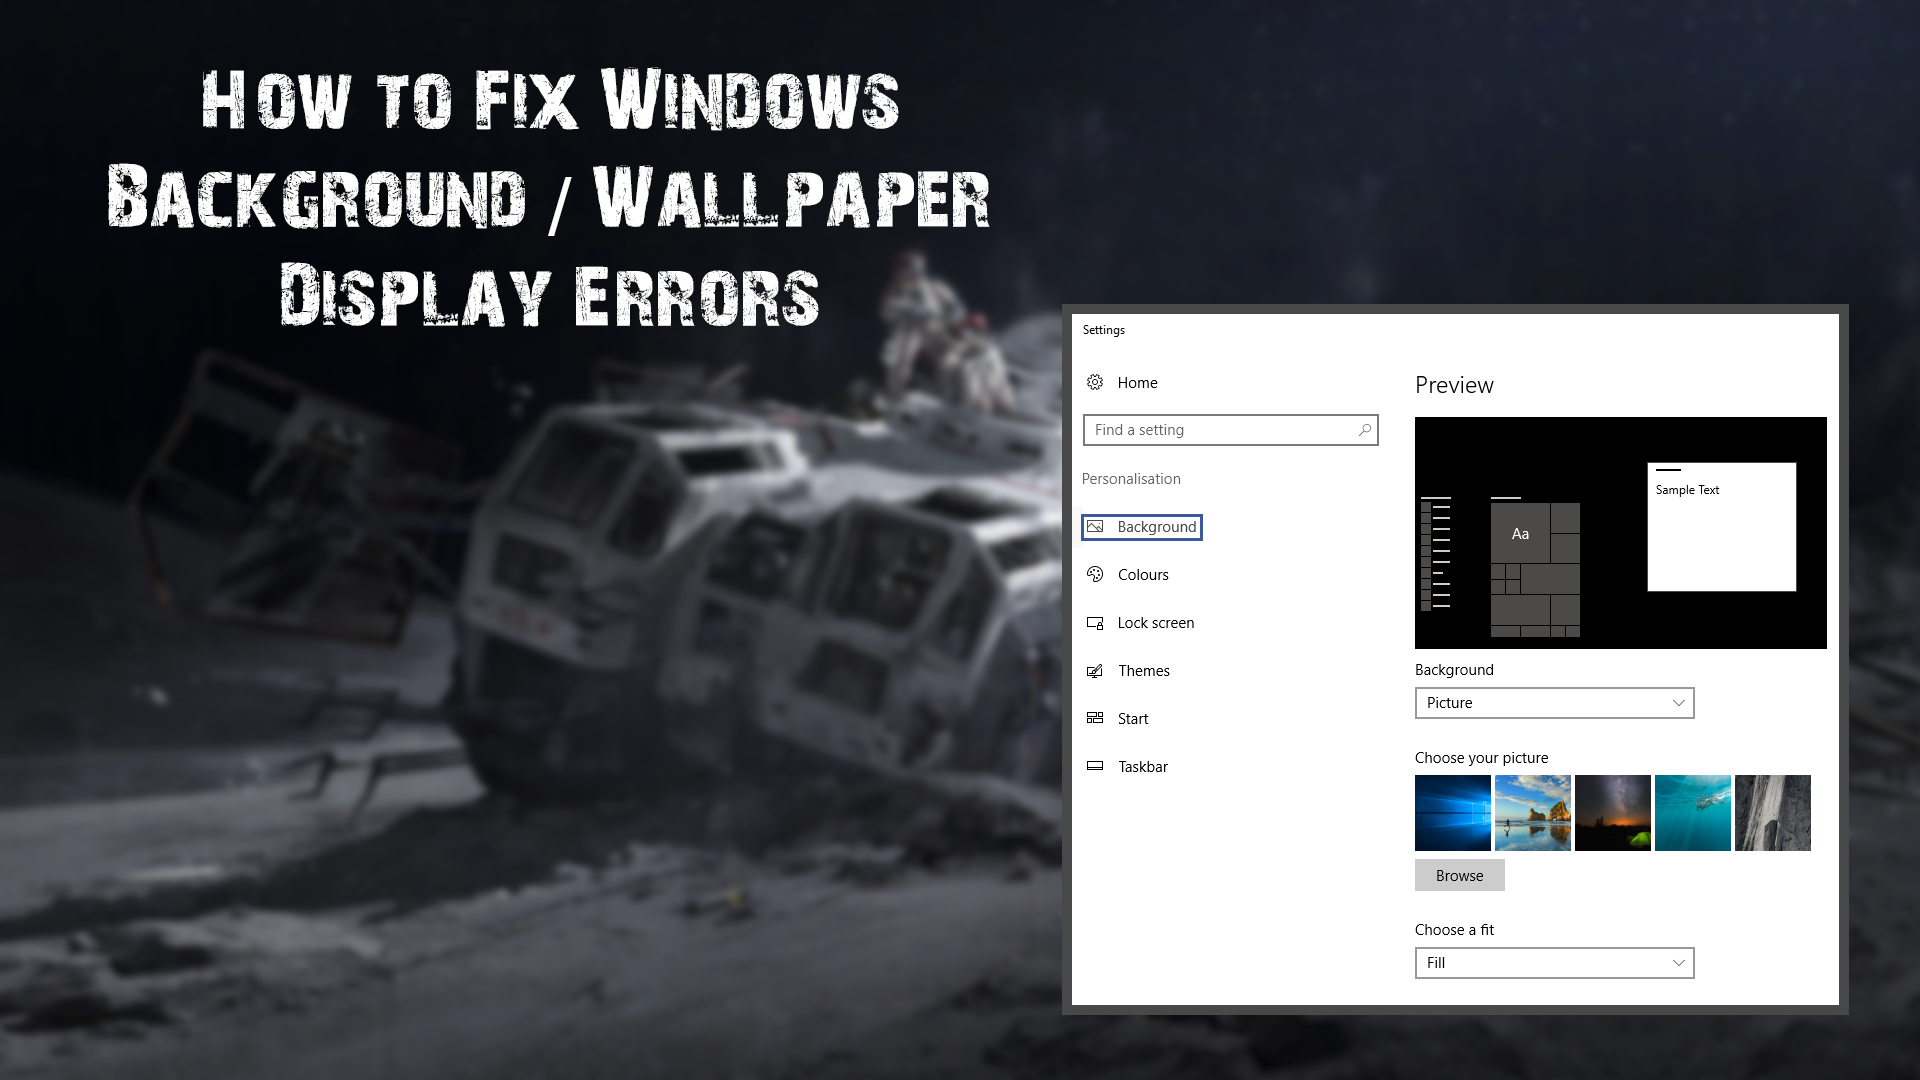 Fix_windows_background_dislaying_issues_error